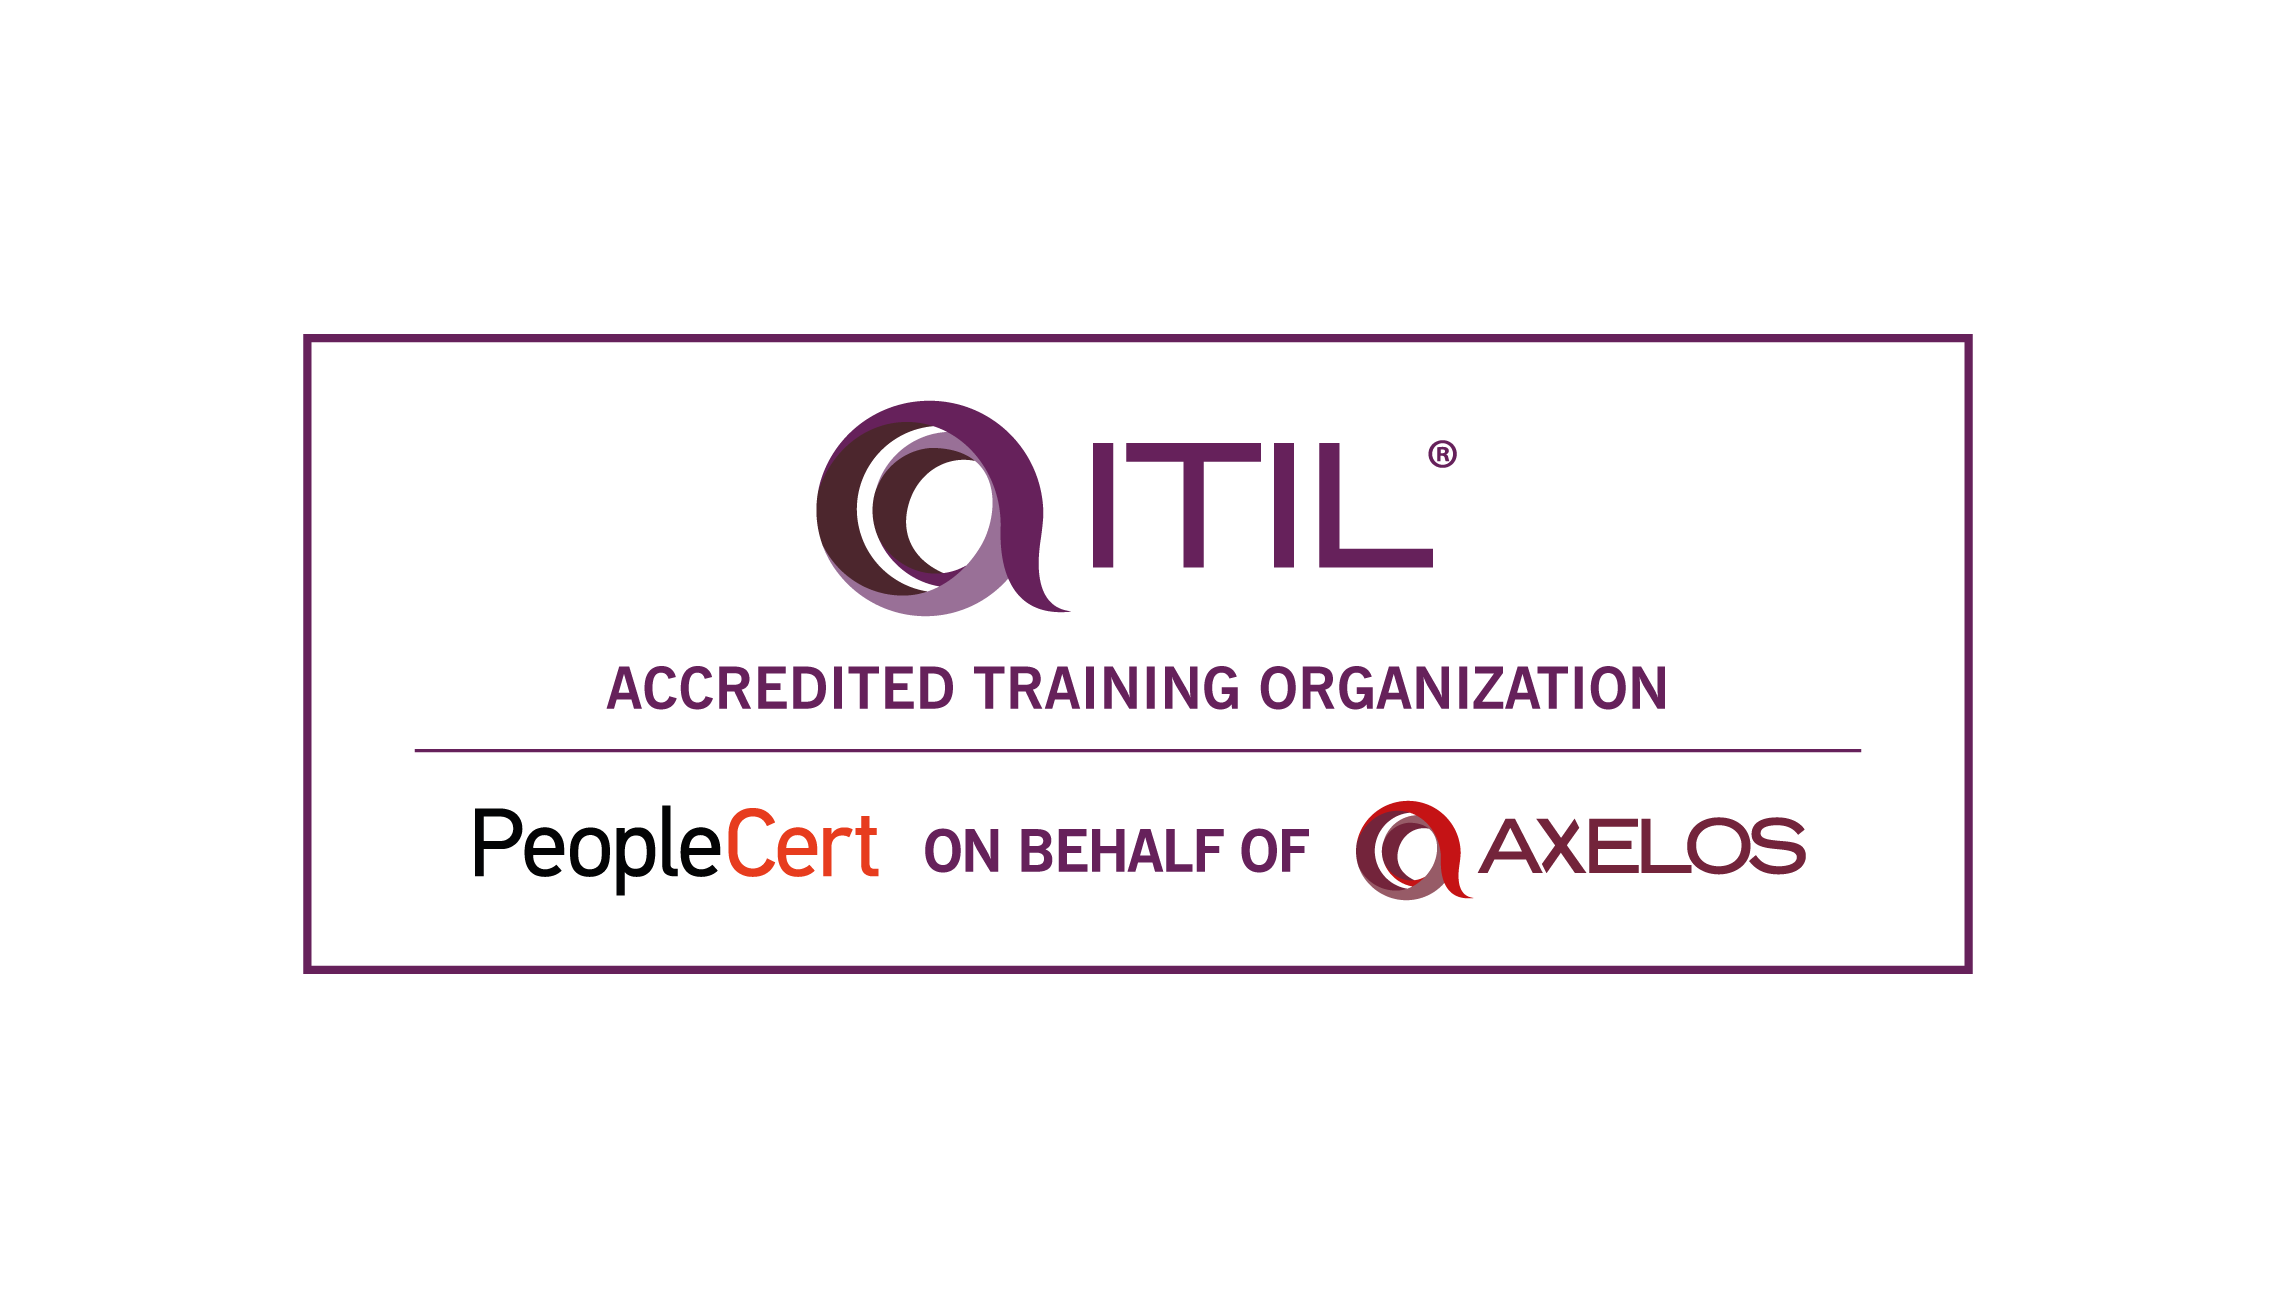 AXELOS: ITIL Accredited Training Organization